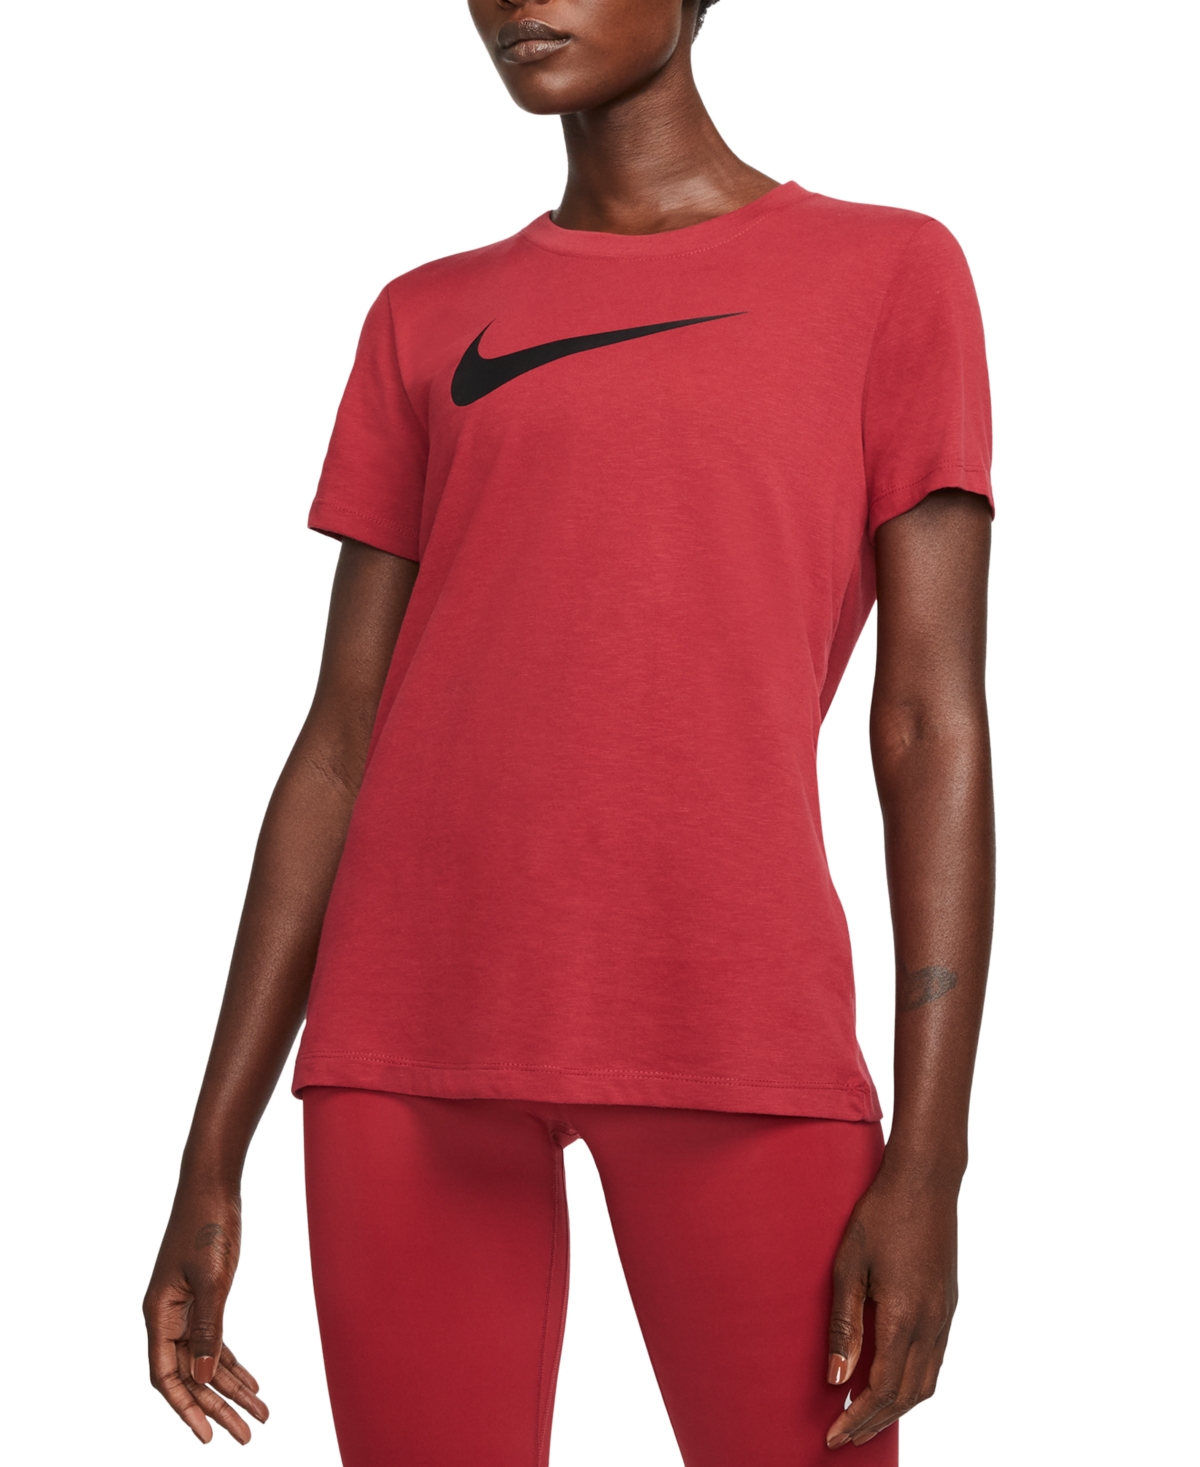 Nike Women's Dry Logo Training T Shirt Pink Size X-Small